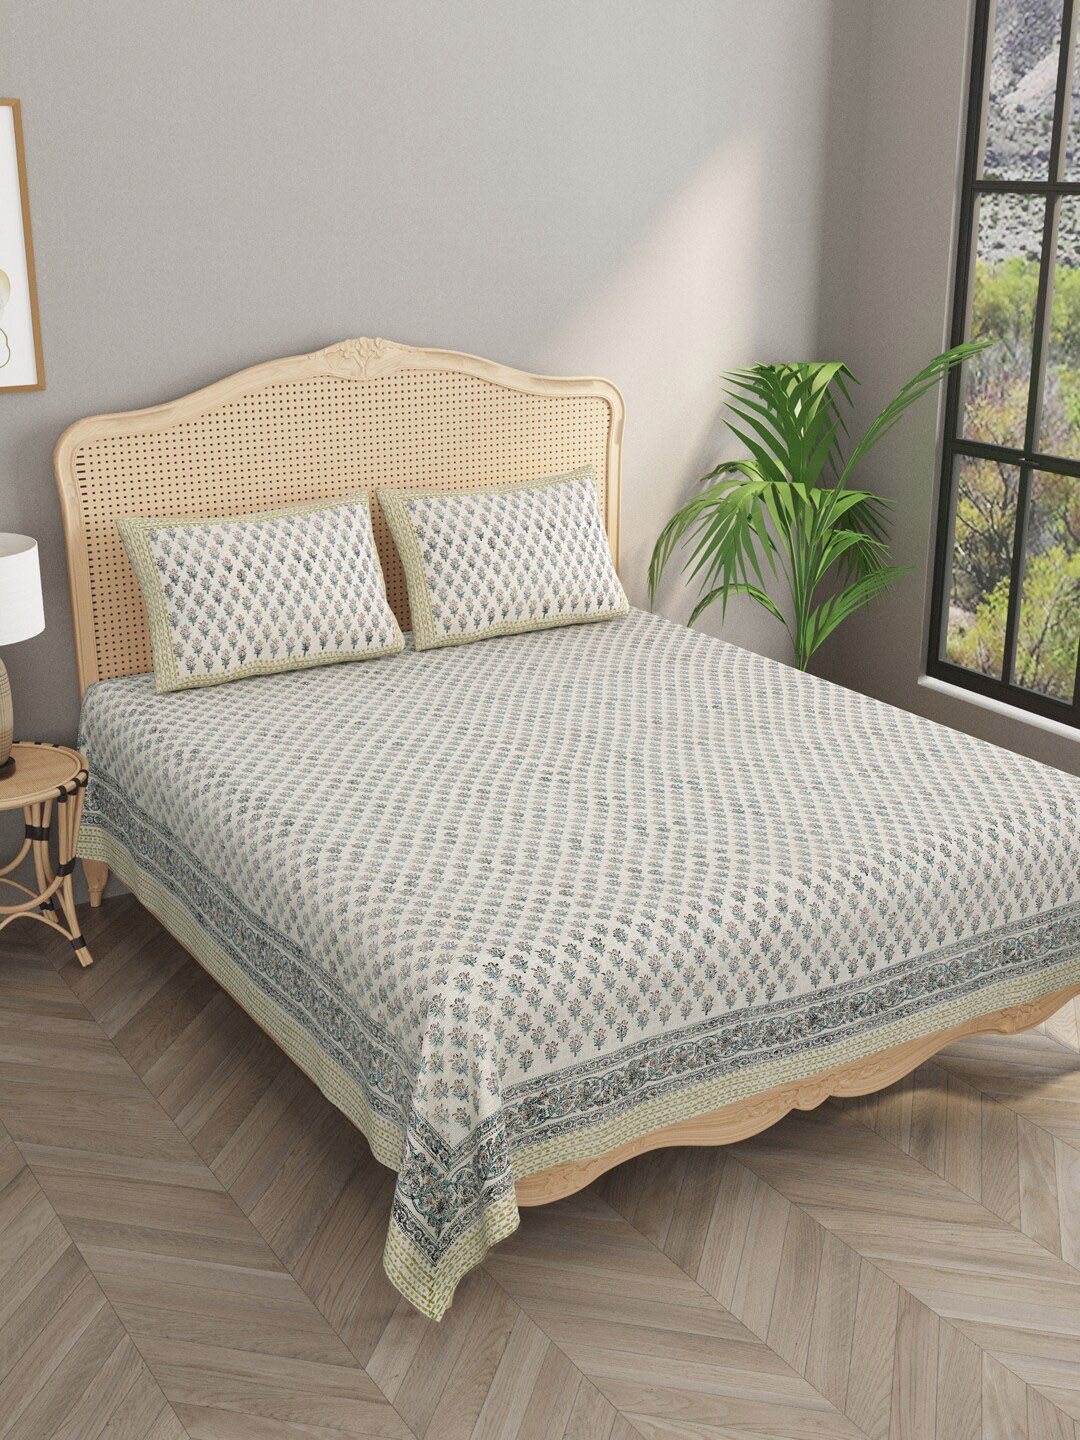 Gulaab Jaipur Printed Bed Covers Price in India